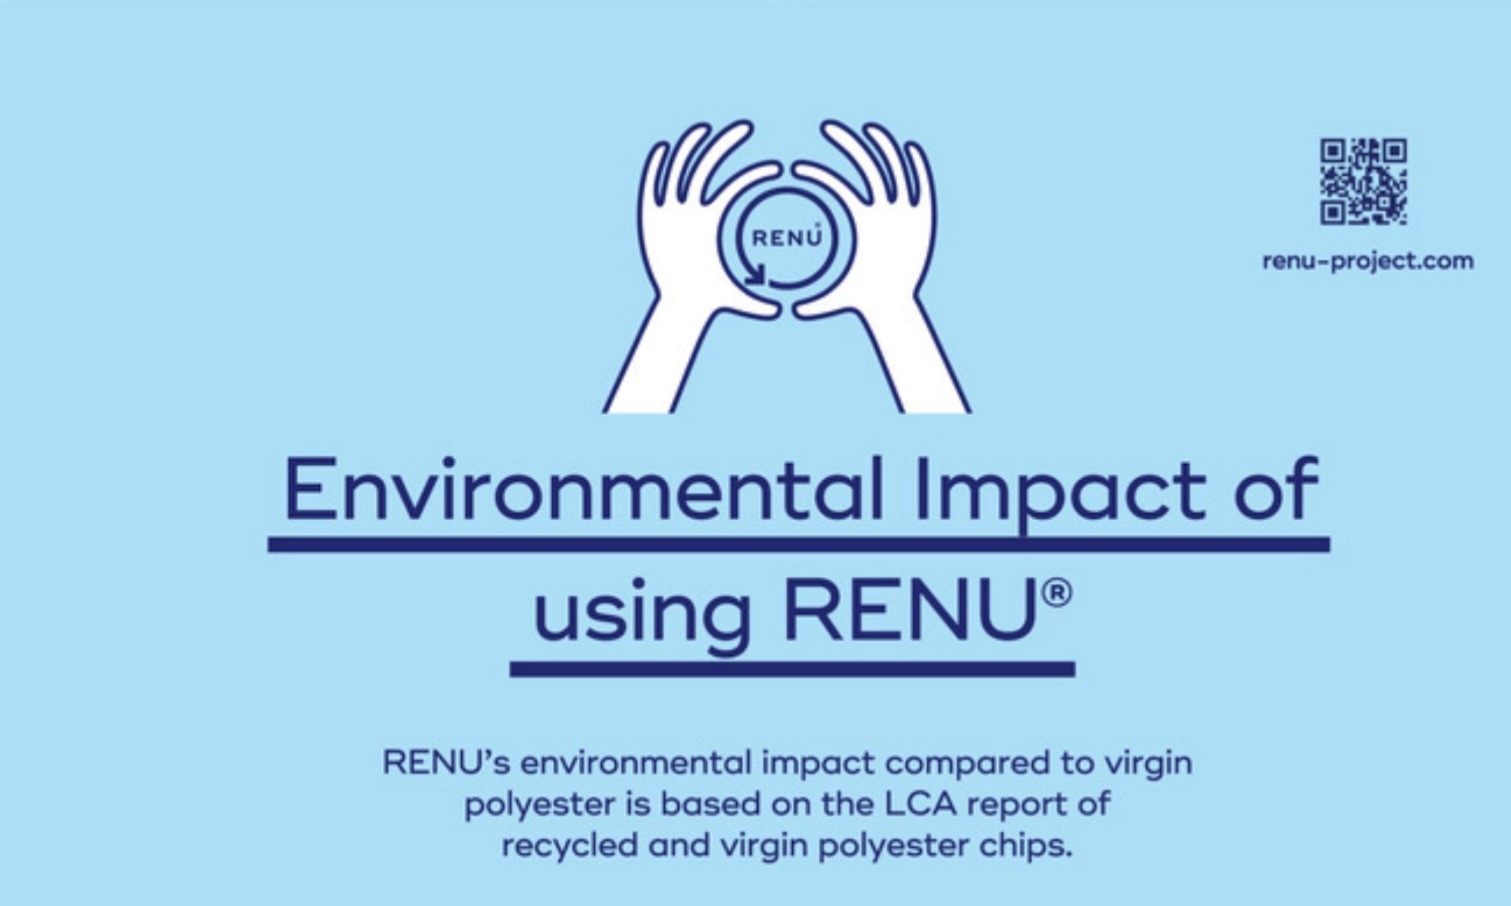 Introducing the environmental impact of adopting RENU